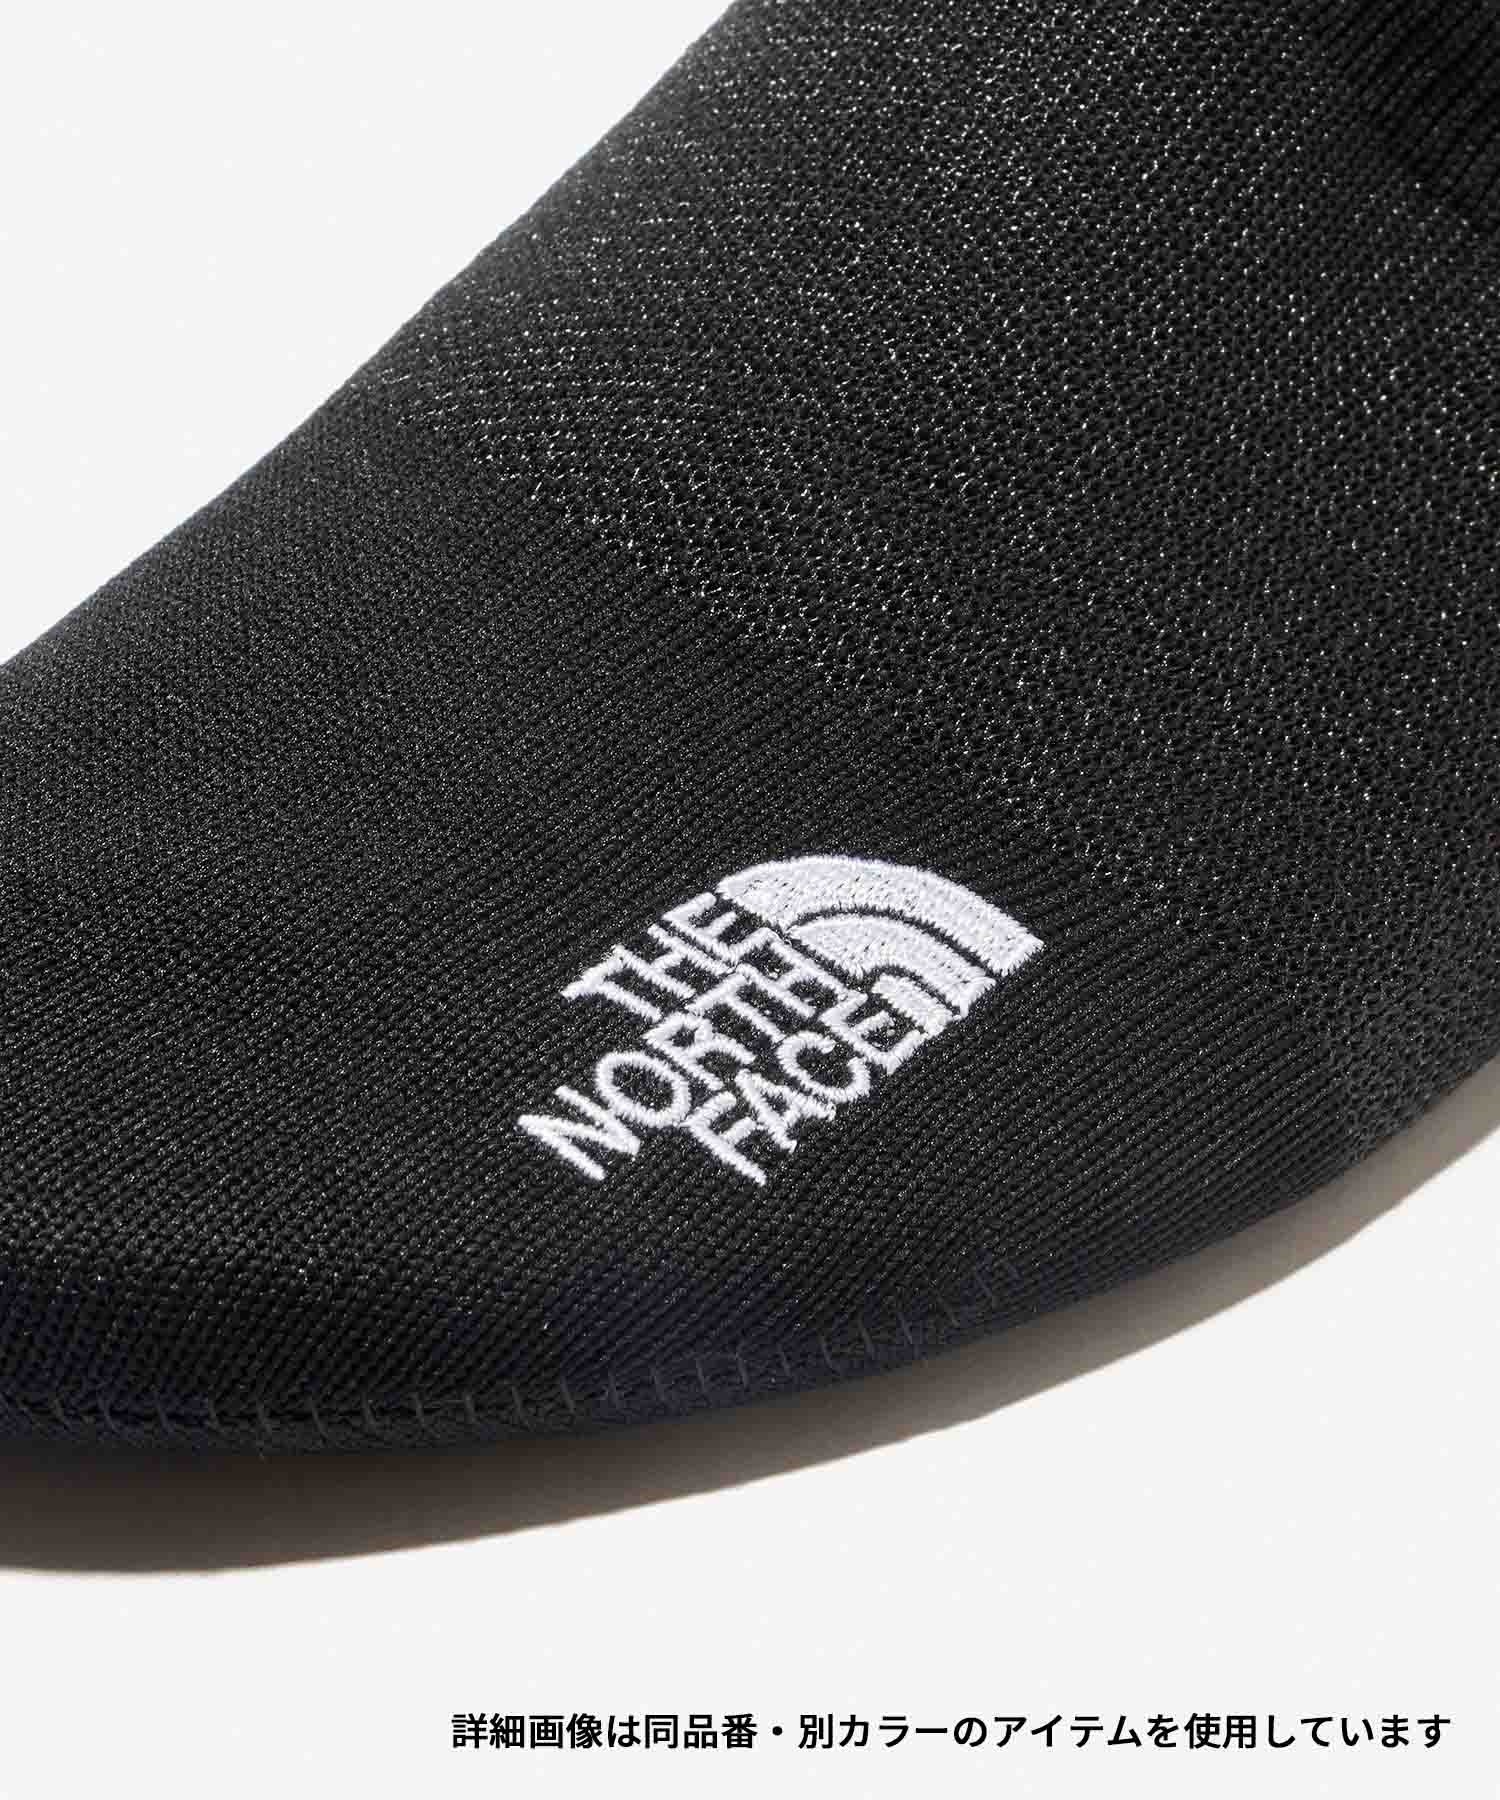 THE NORTH FACE/ザ・ノース・フェイス PORTABLE SOLIPPER ポータブル ソリッパー 靴下 ソックス NN82370(NK-M)